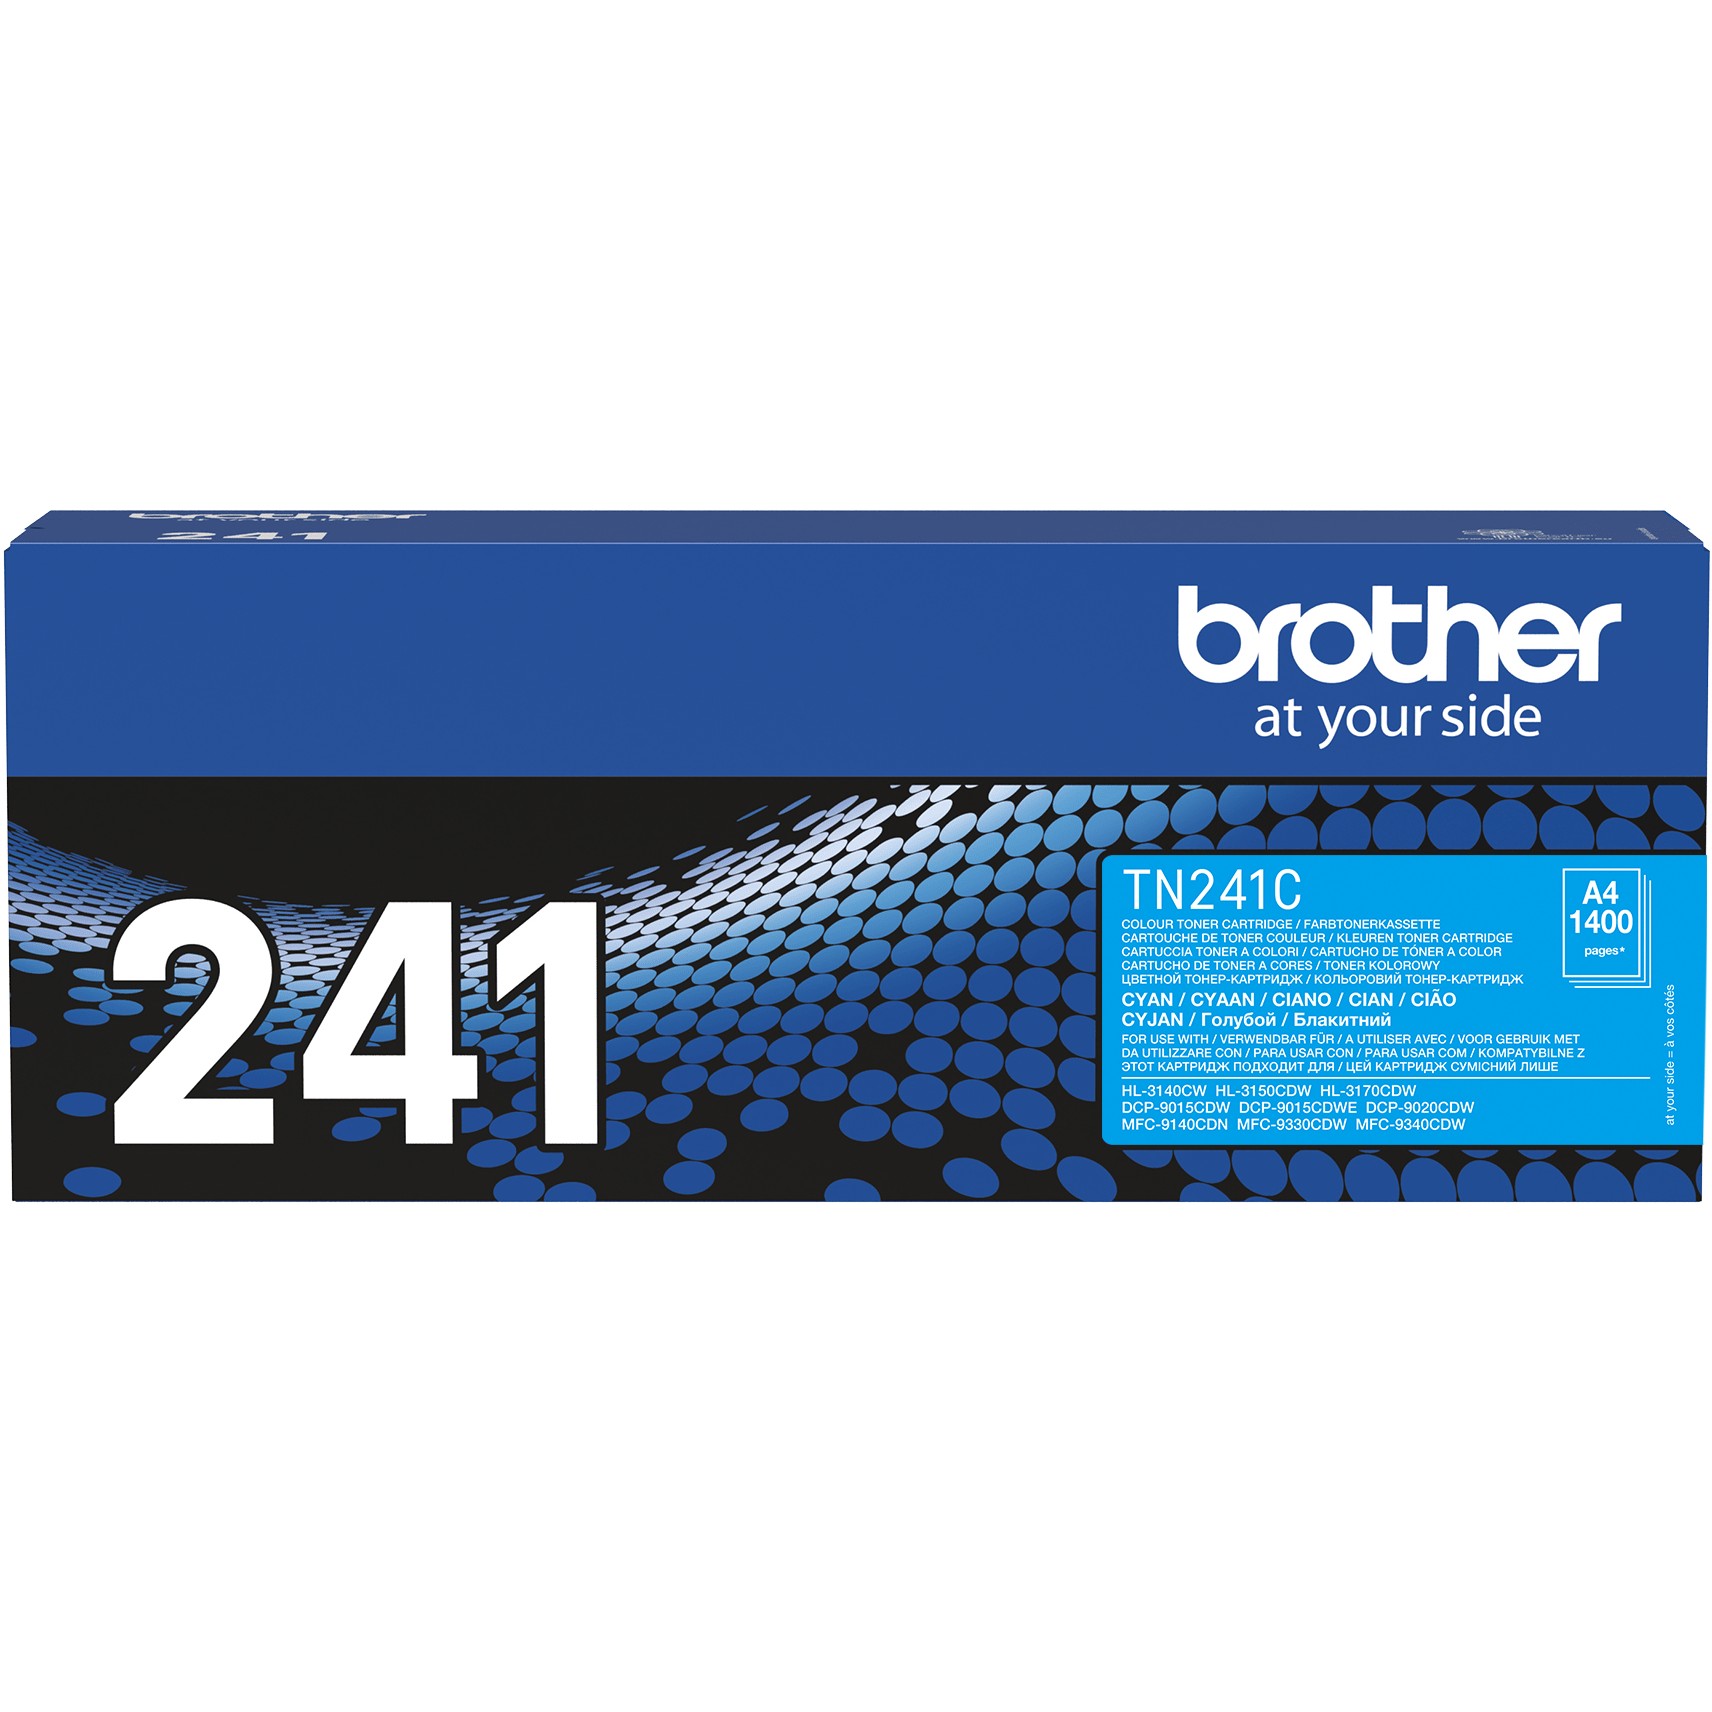 Brother TN-241C toner cartridge - TN241C